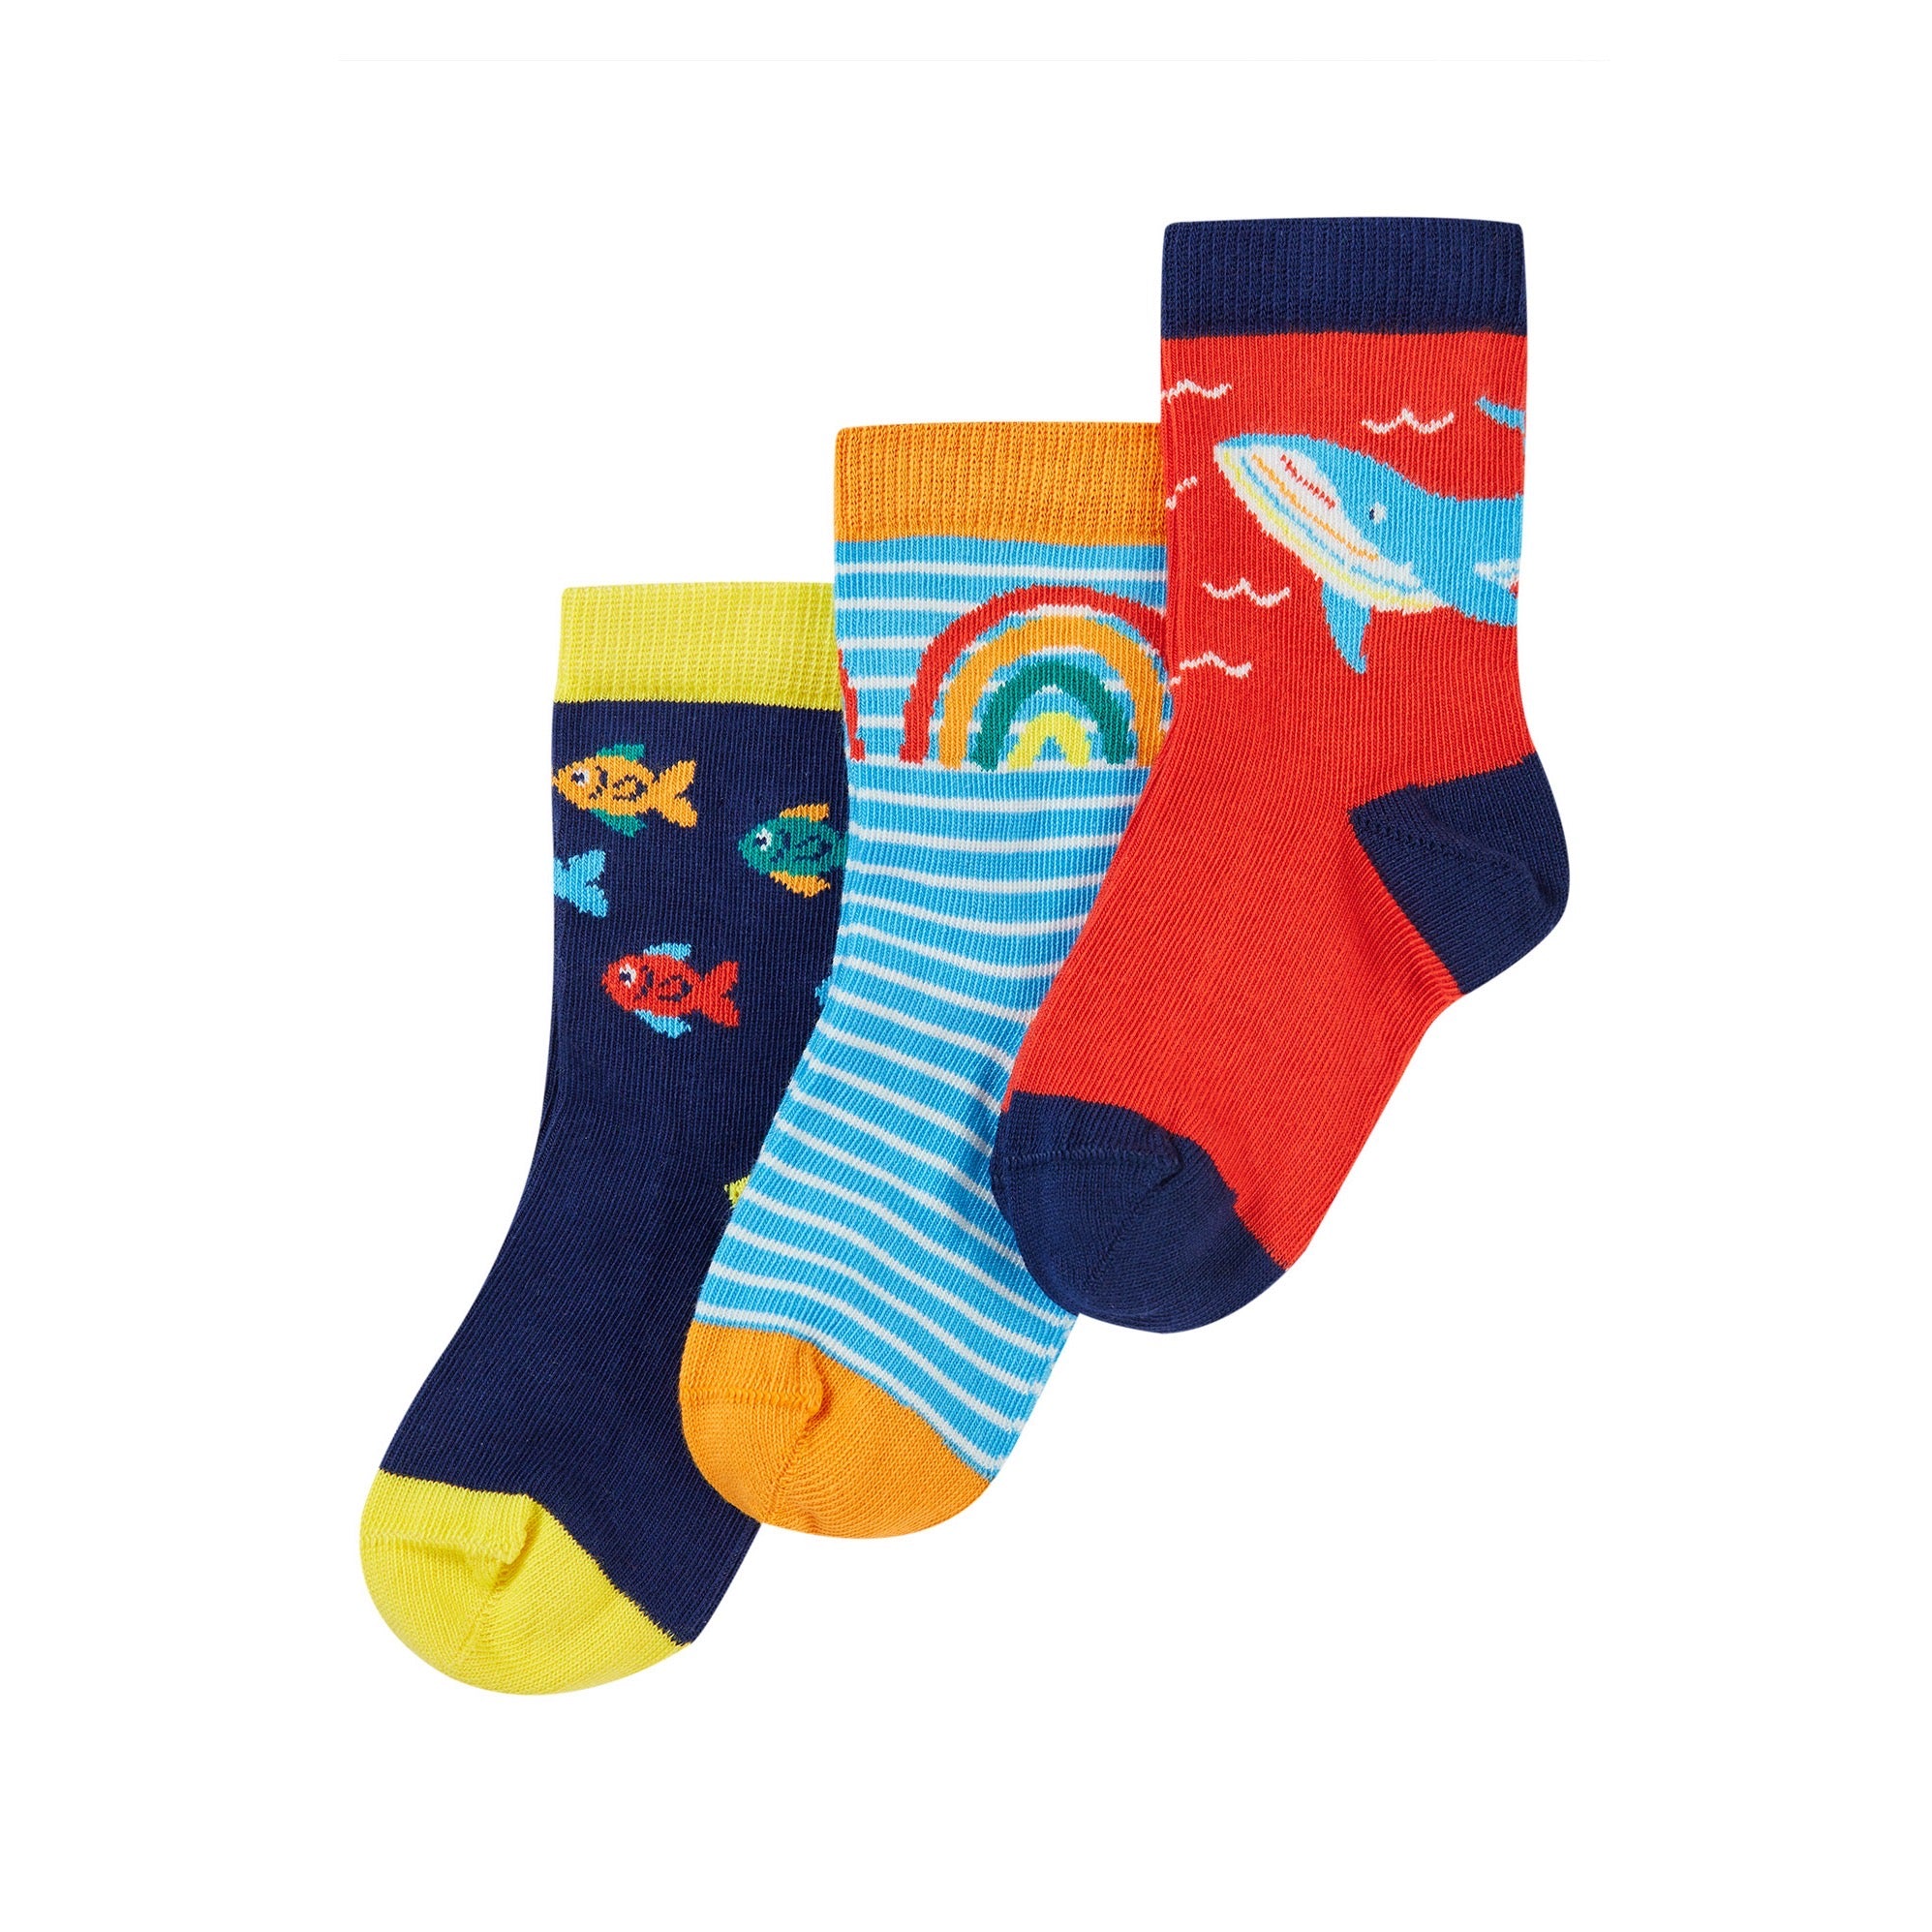 Frugi 3 Pack Infant Socks Lm2na Rainbow Sea Clothing 0-6M / Multi,6-12M / Multi,1-2YRS / Multi,2-4YRS / Multi